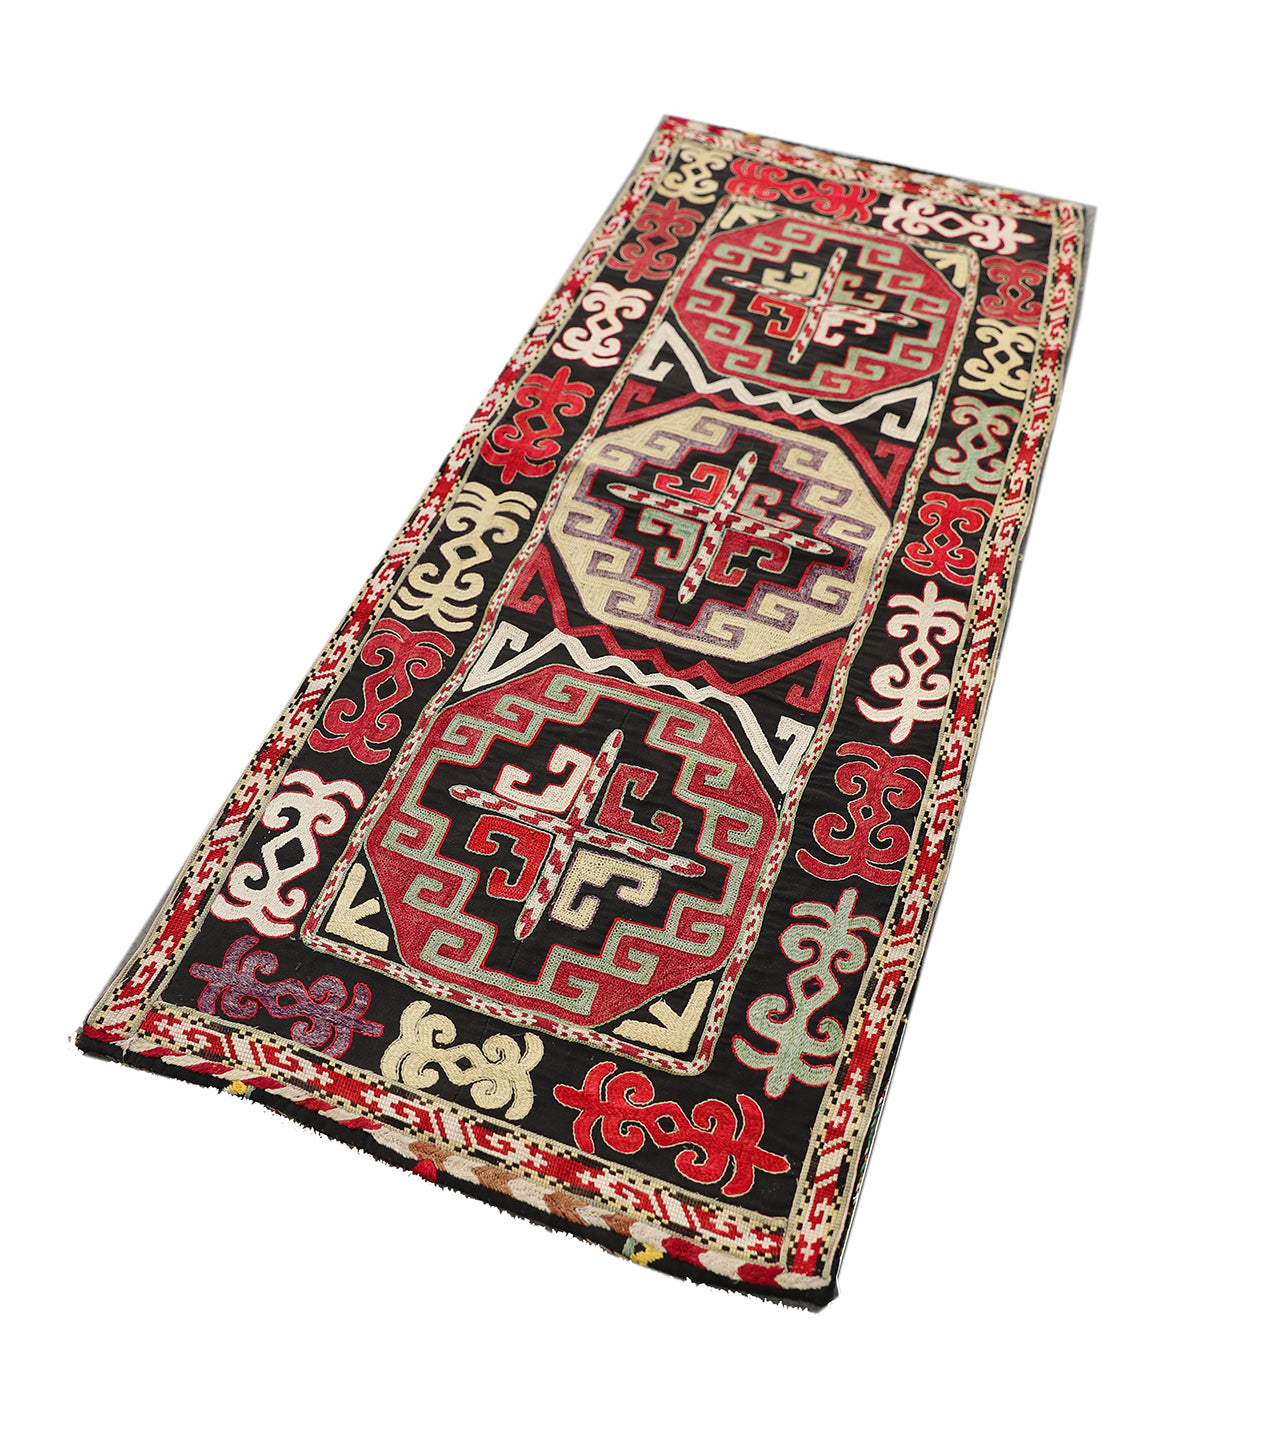 1'5"x5' Vintage Uzbek Cross Stitch Embroidered Textile